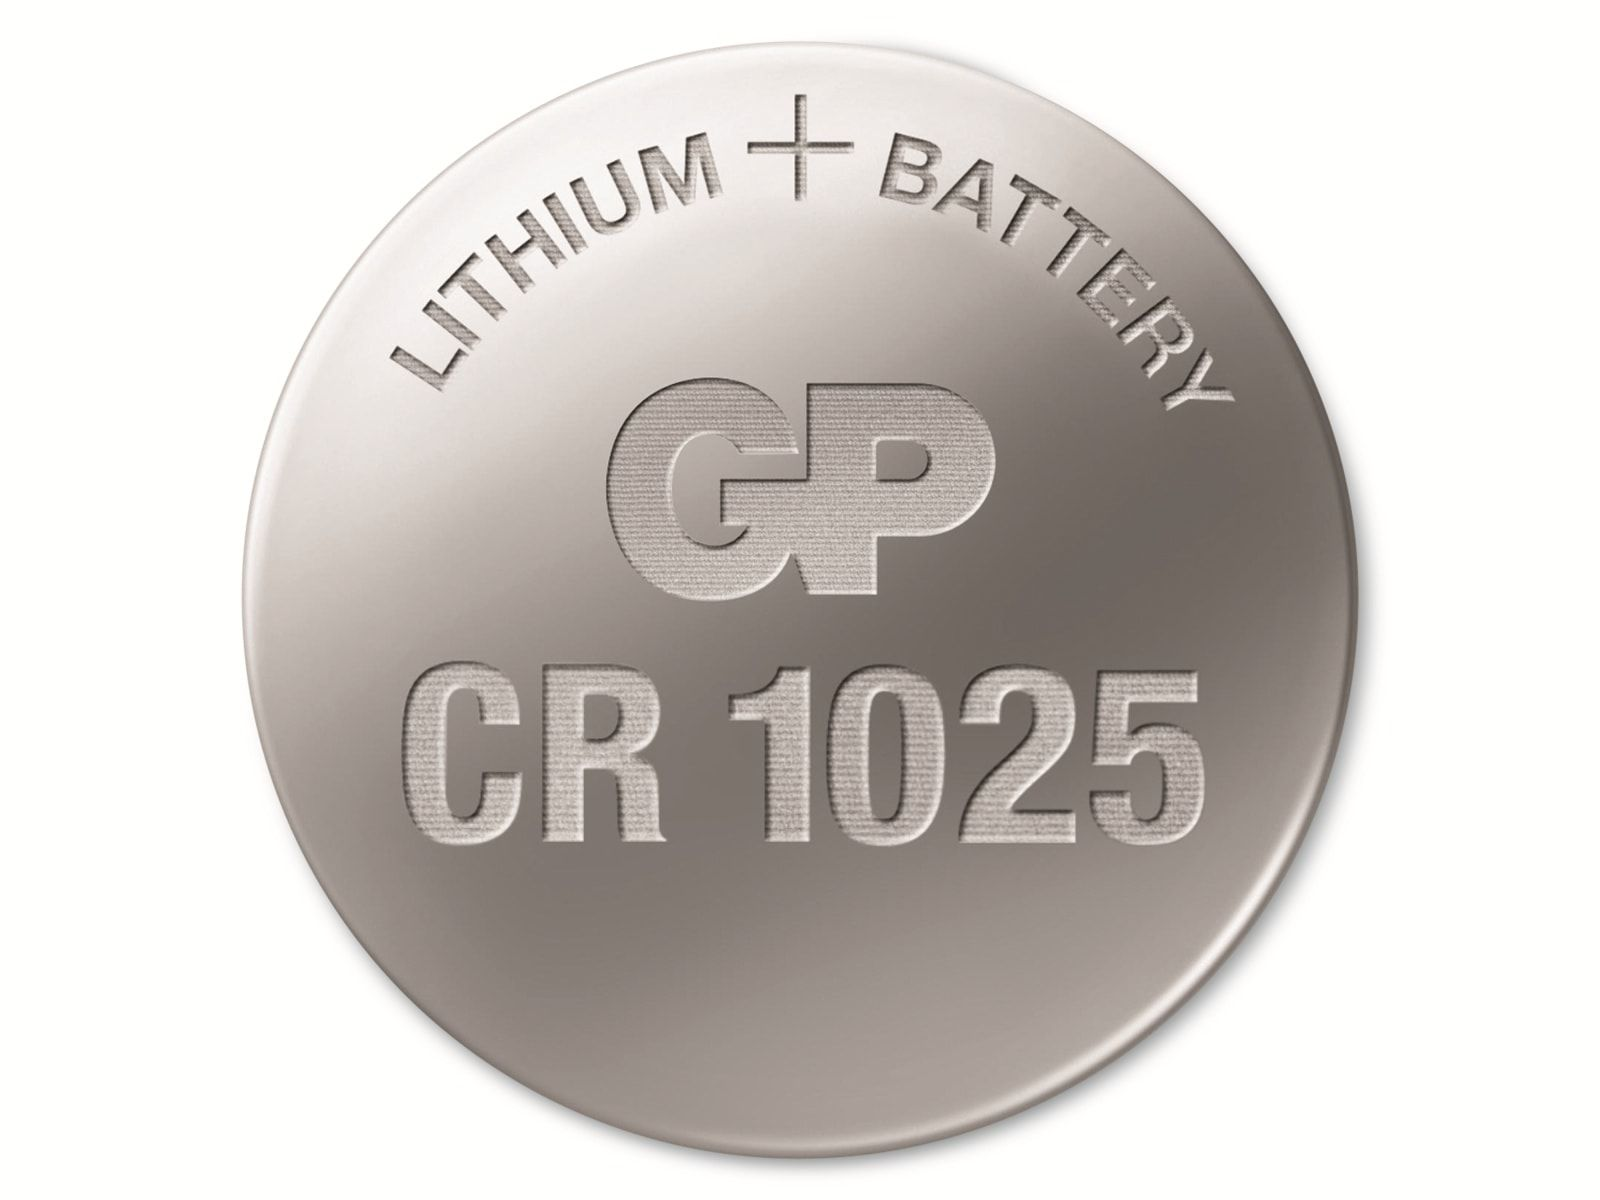 GP Knopfzelle CR1025, Lithium-Knopfzelle Lithium 3V